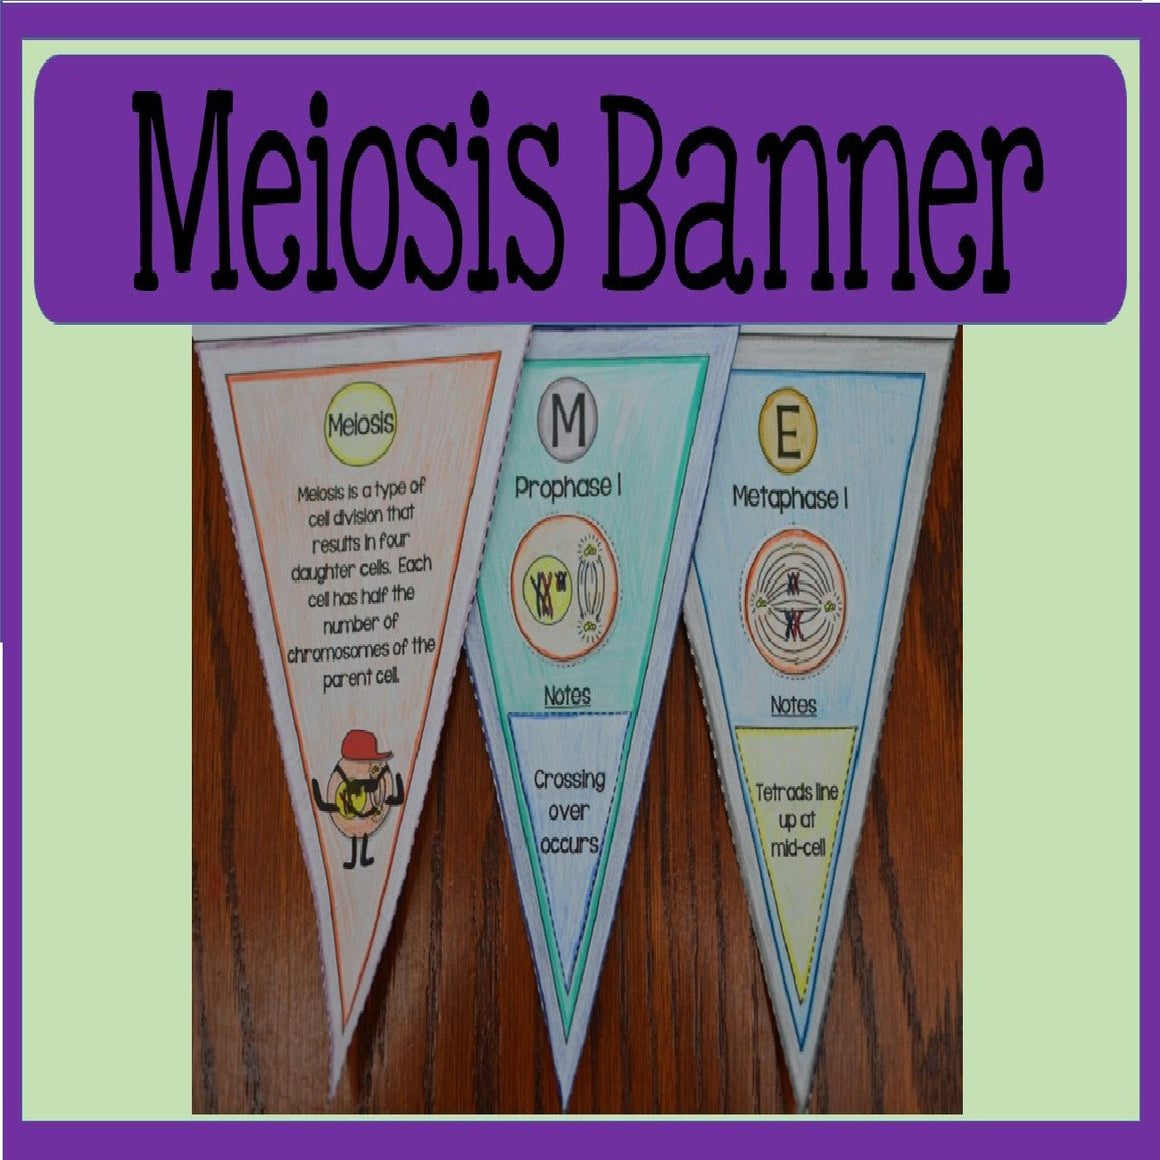 Meiosis Banner